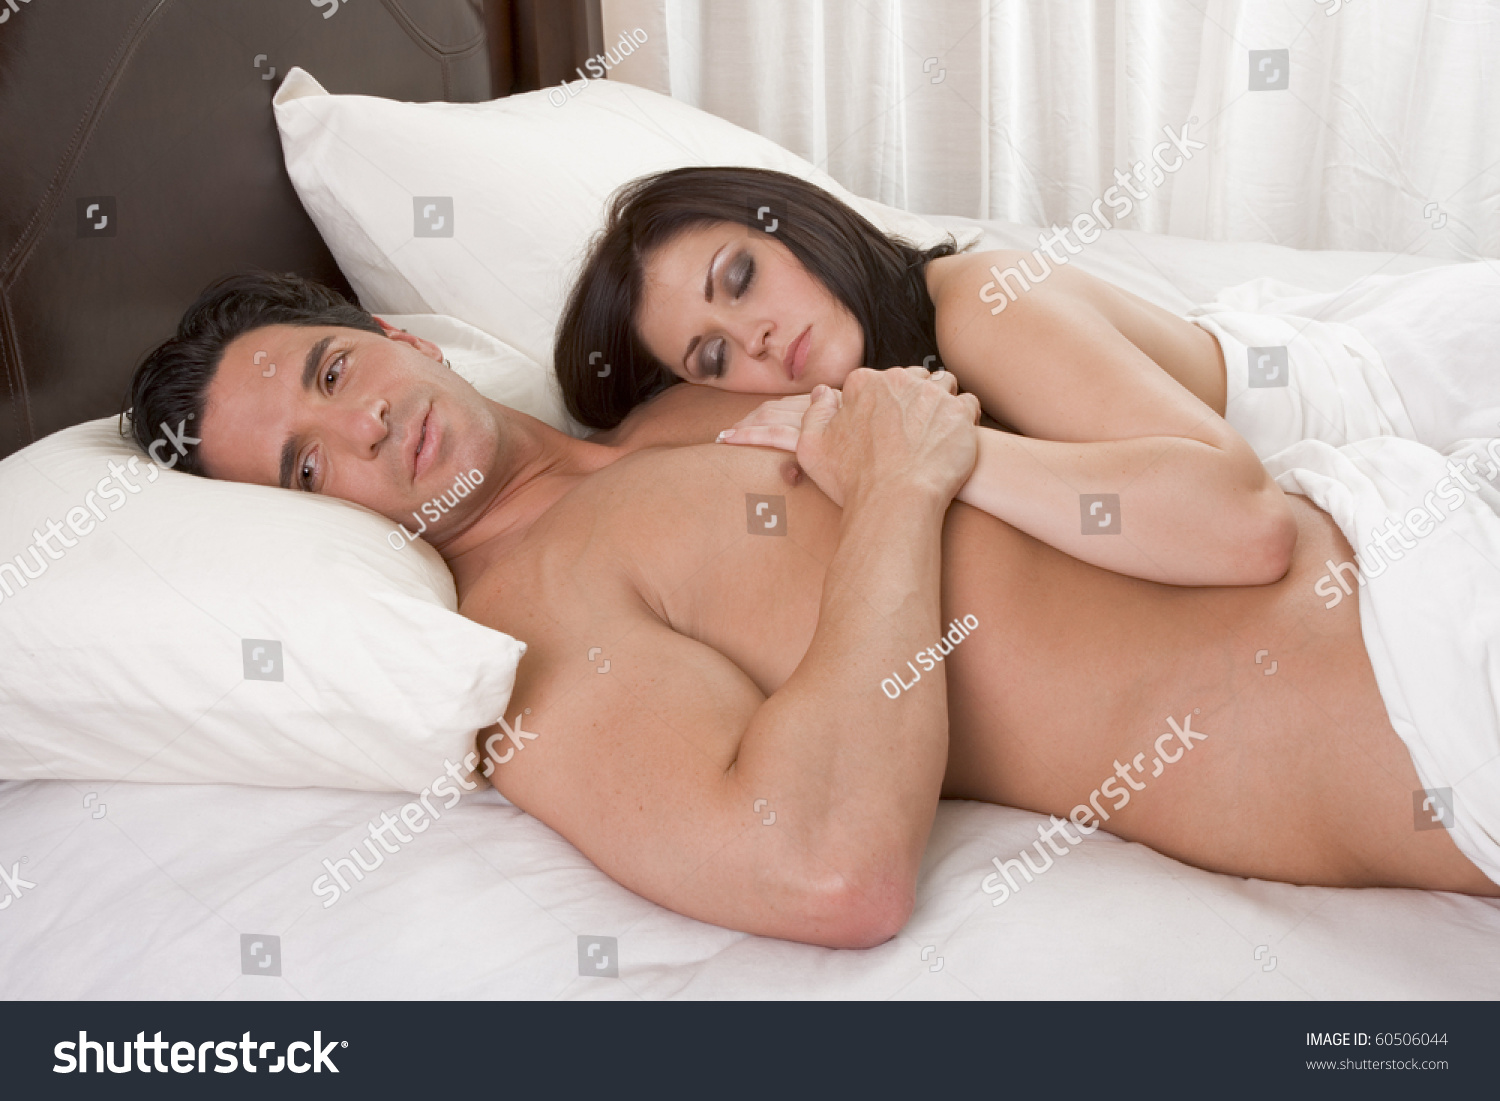 Loving Nude Couples Pics